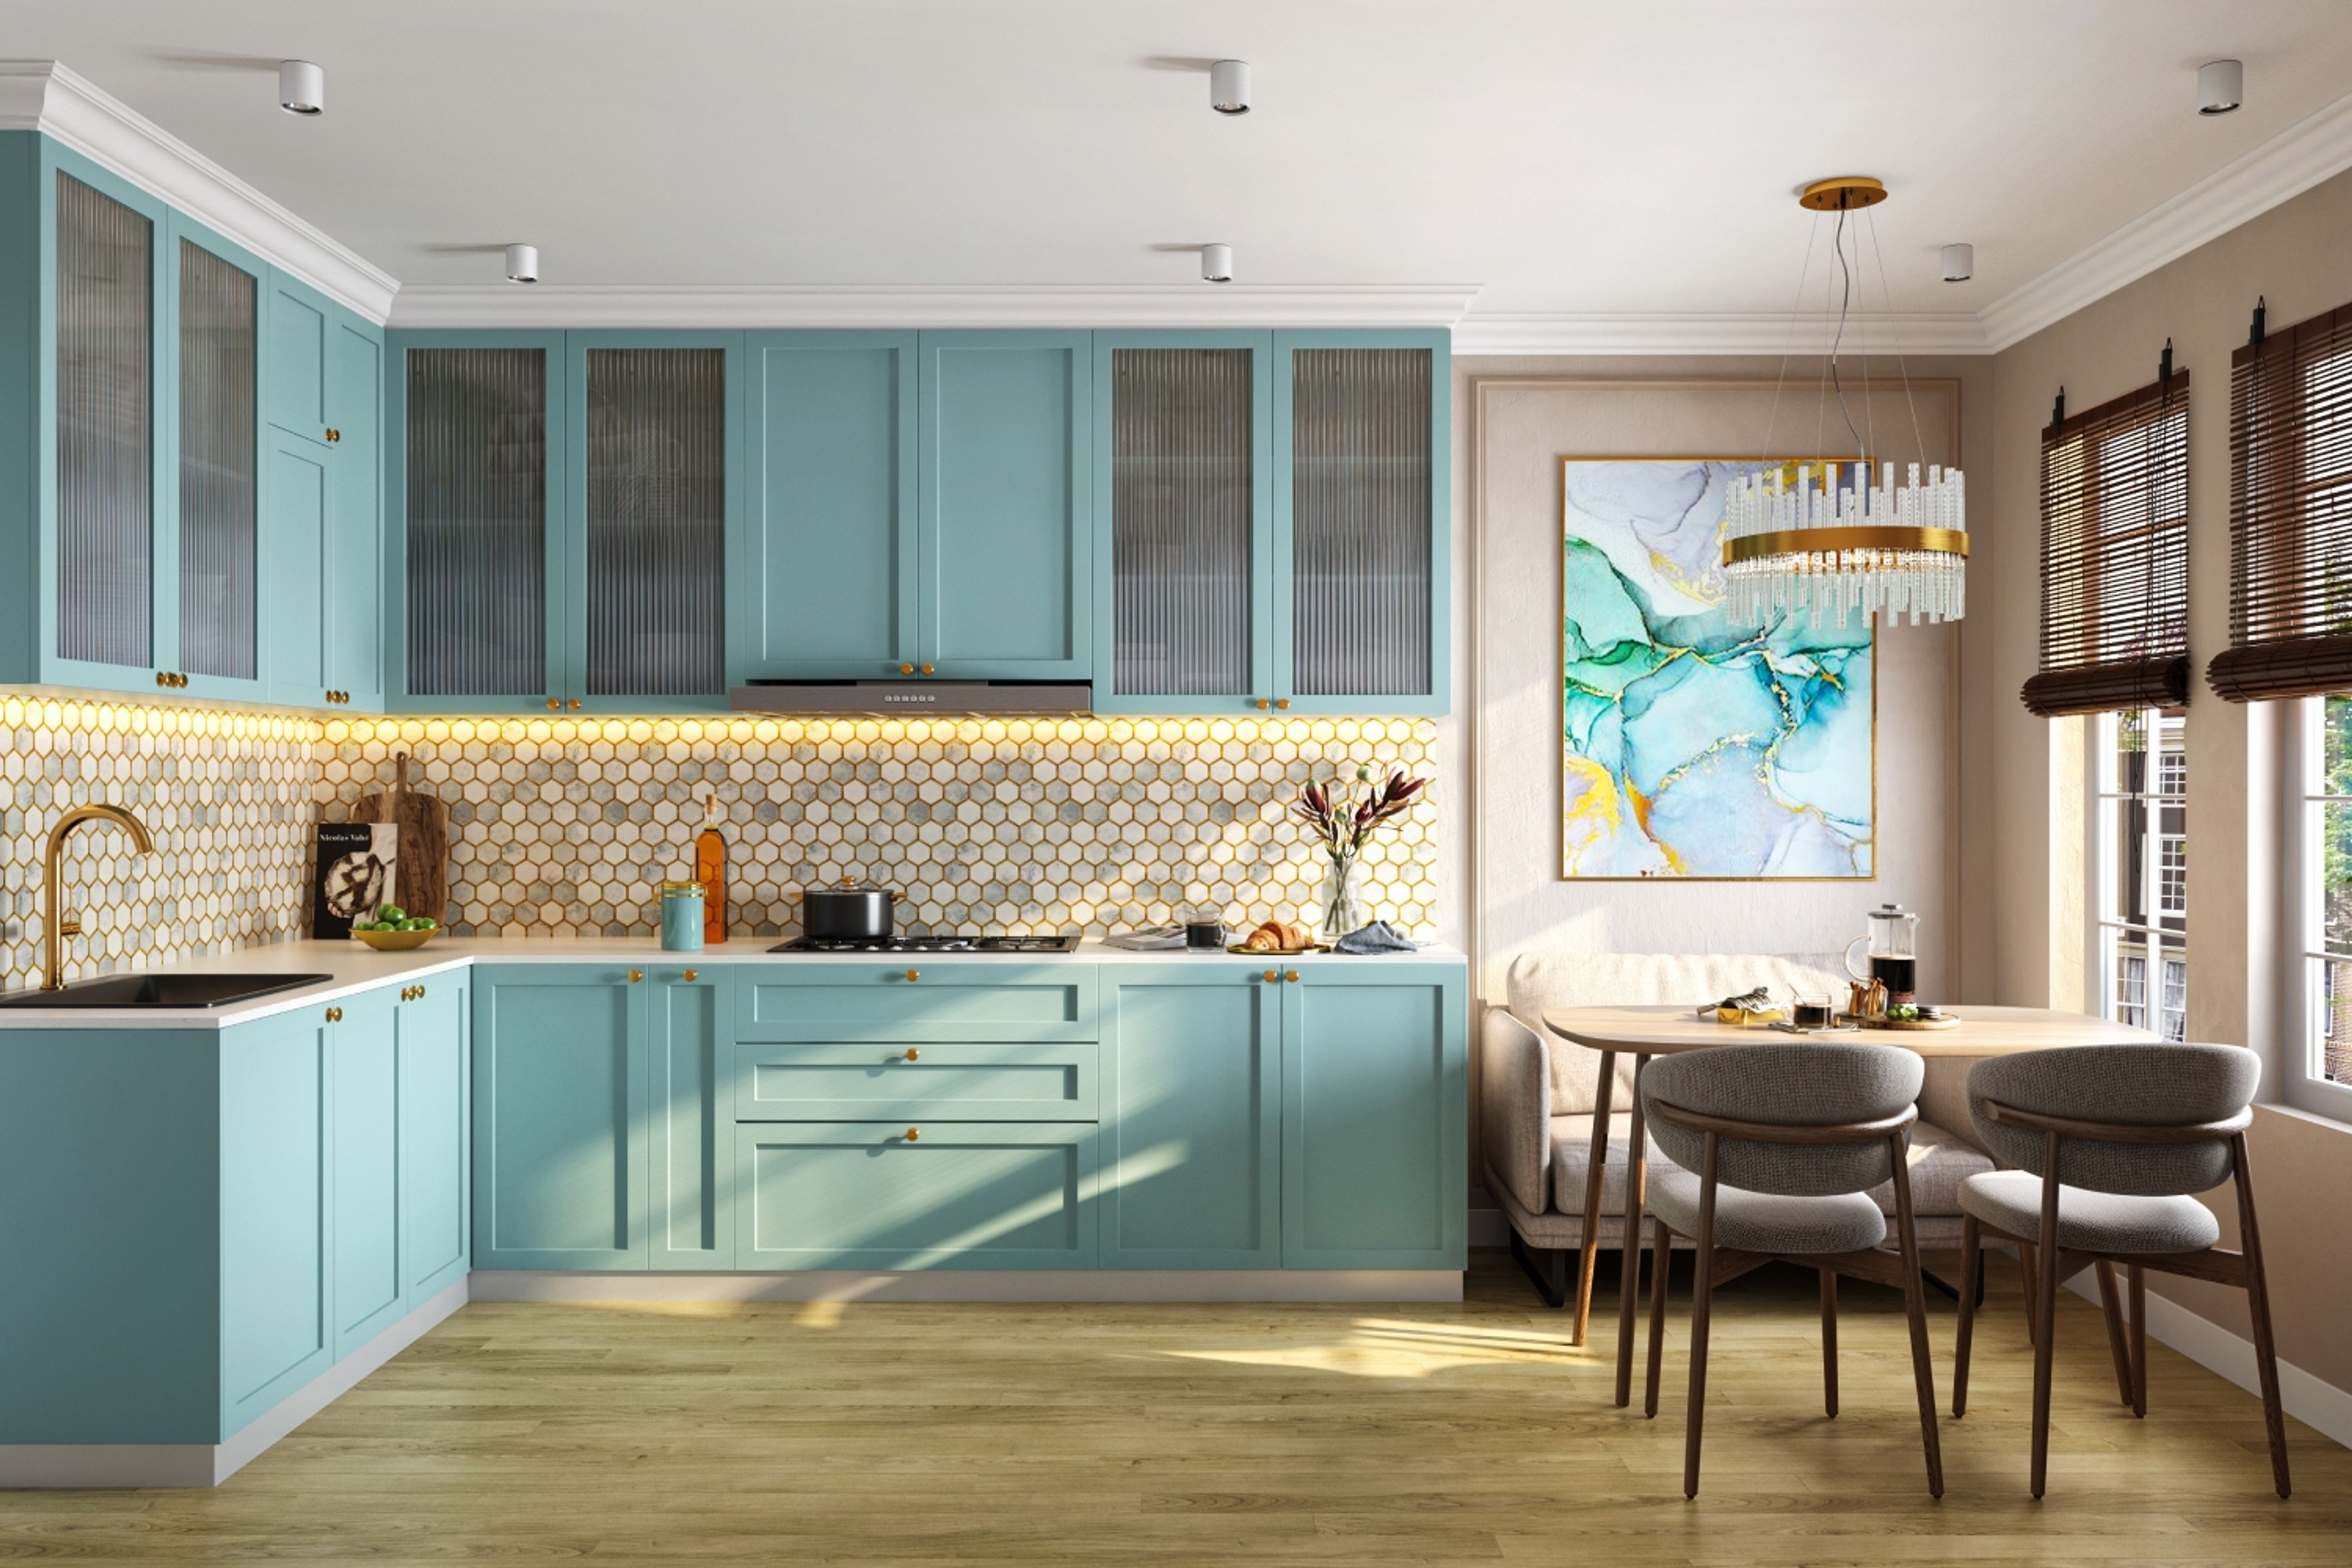 Modular Blue Kitchen Cabinet Design With Hexagonal Kitchen Tiles | Livspace